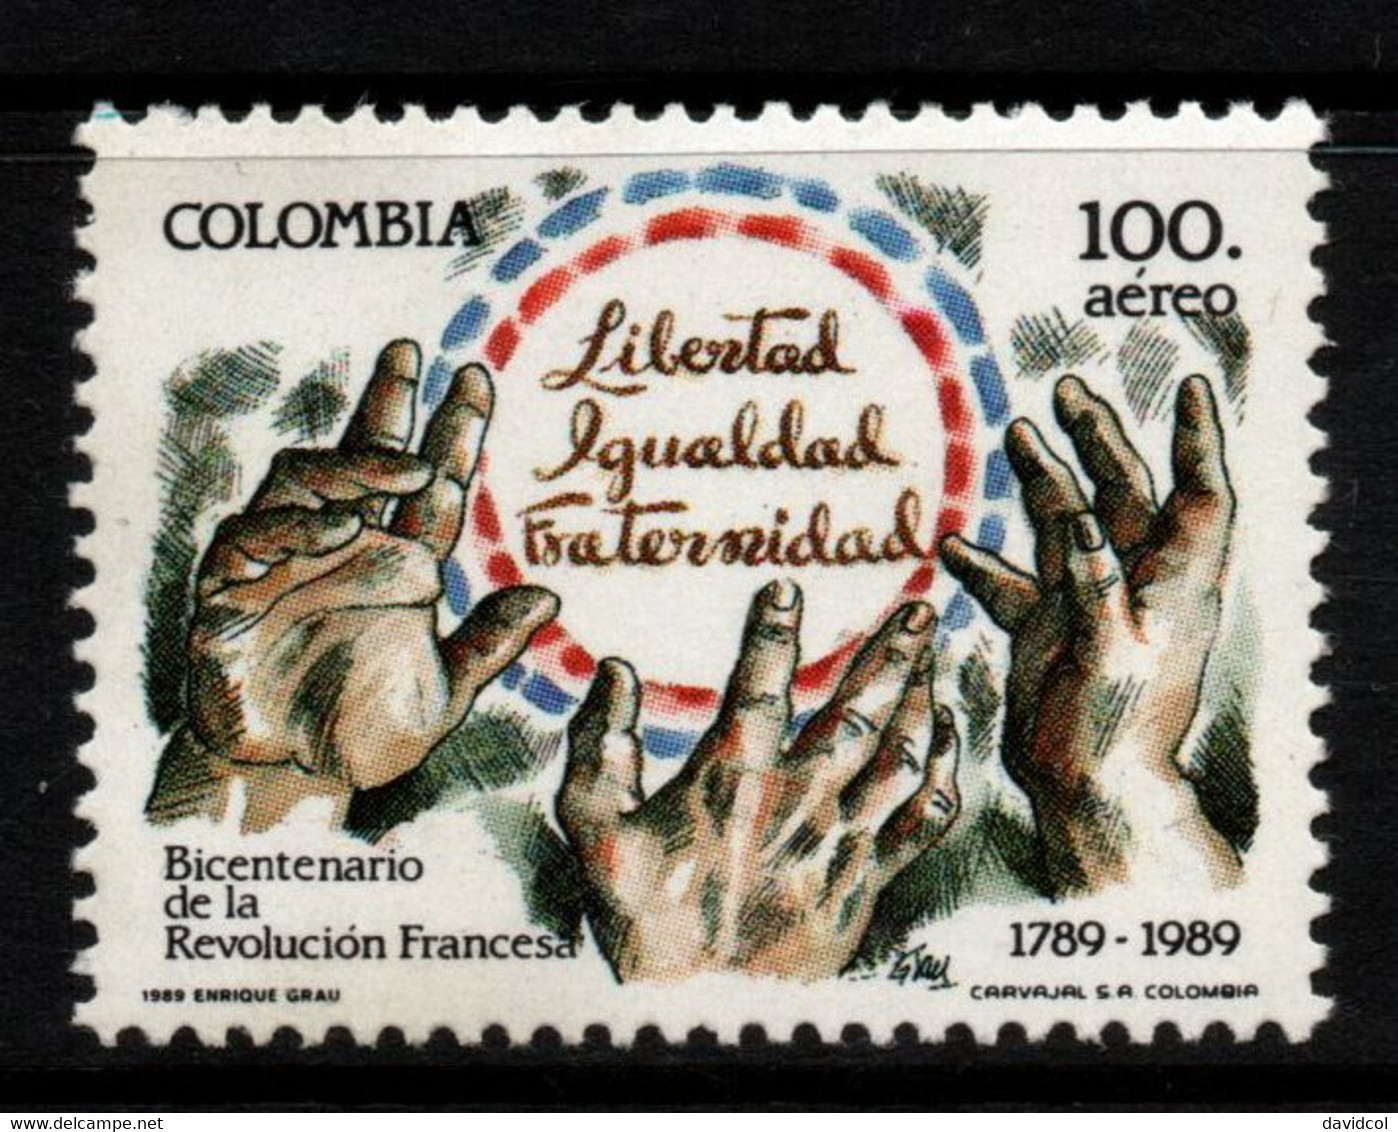 05- KOLUMBIEN - 1989 - MI#:1752 - MNH- BICENTENARY OF THE FRENCH REVOLUTION  1789-1989 - Colombia